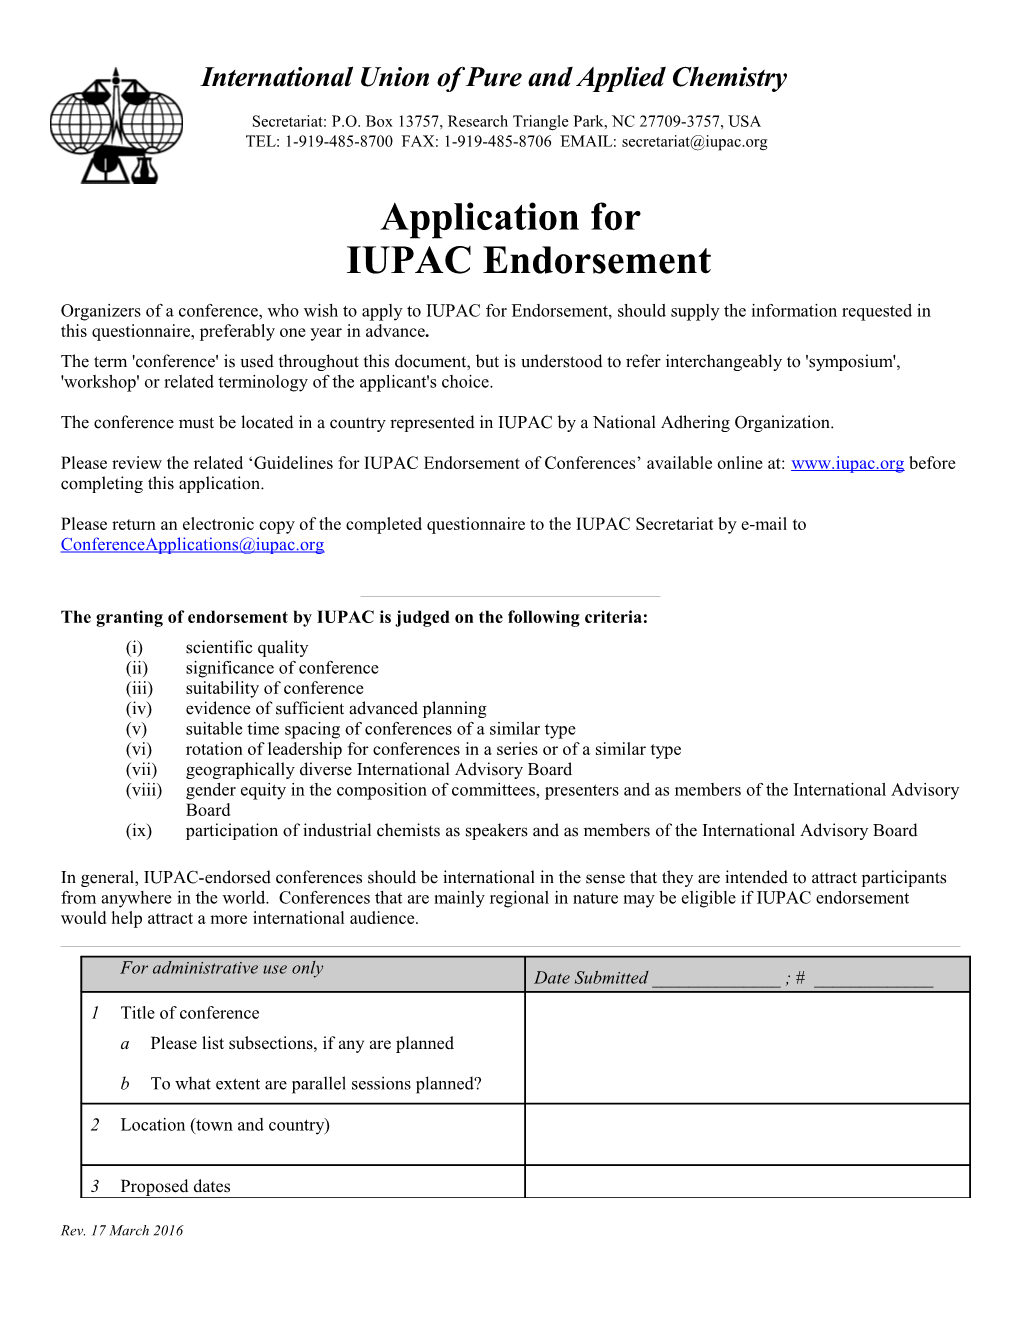 Application for IUPAC Endorsement